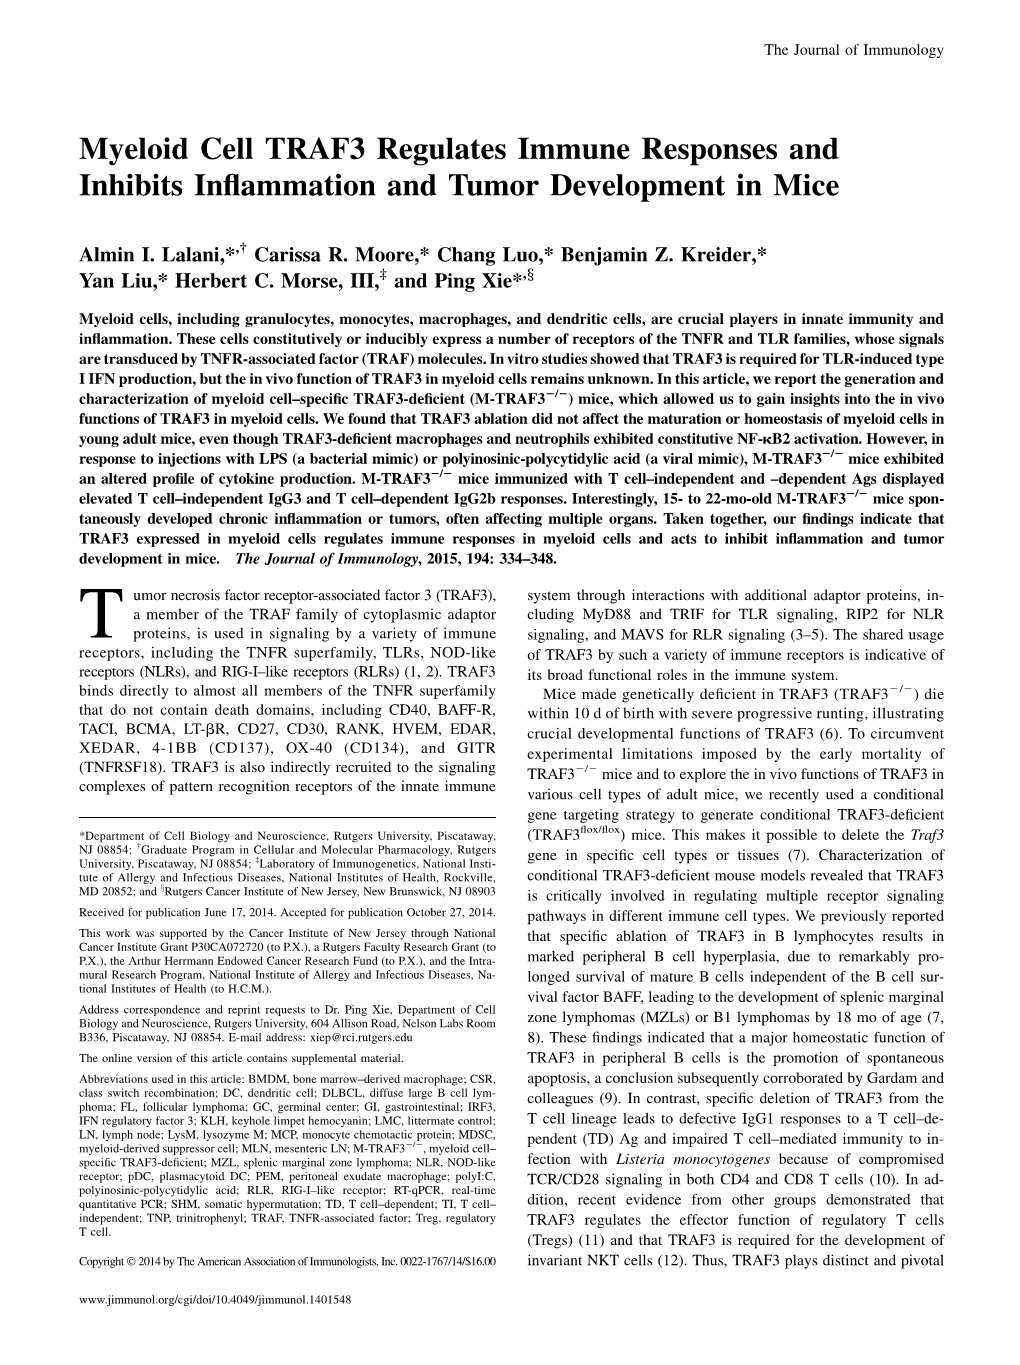 Tumor Development in Mice Responses and Inhibits